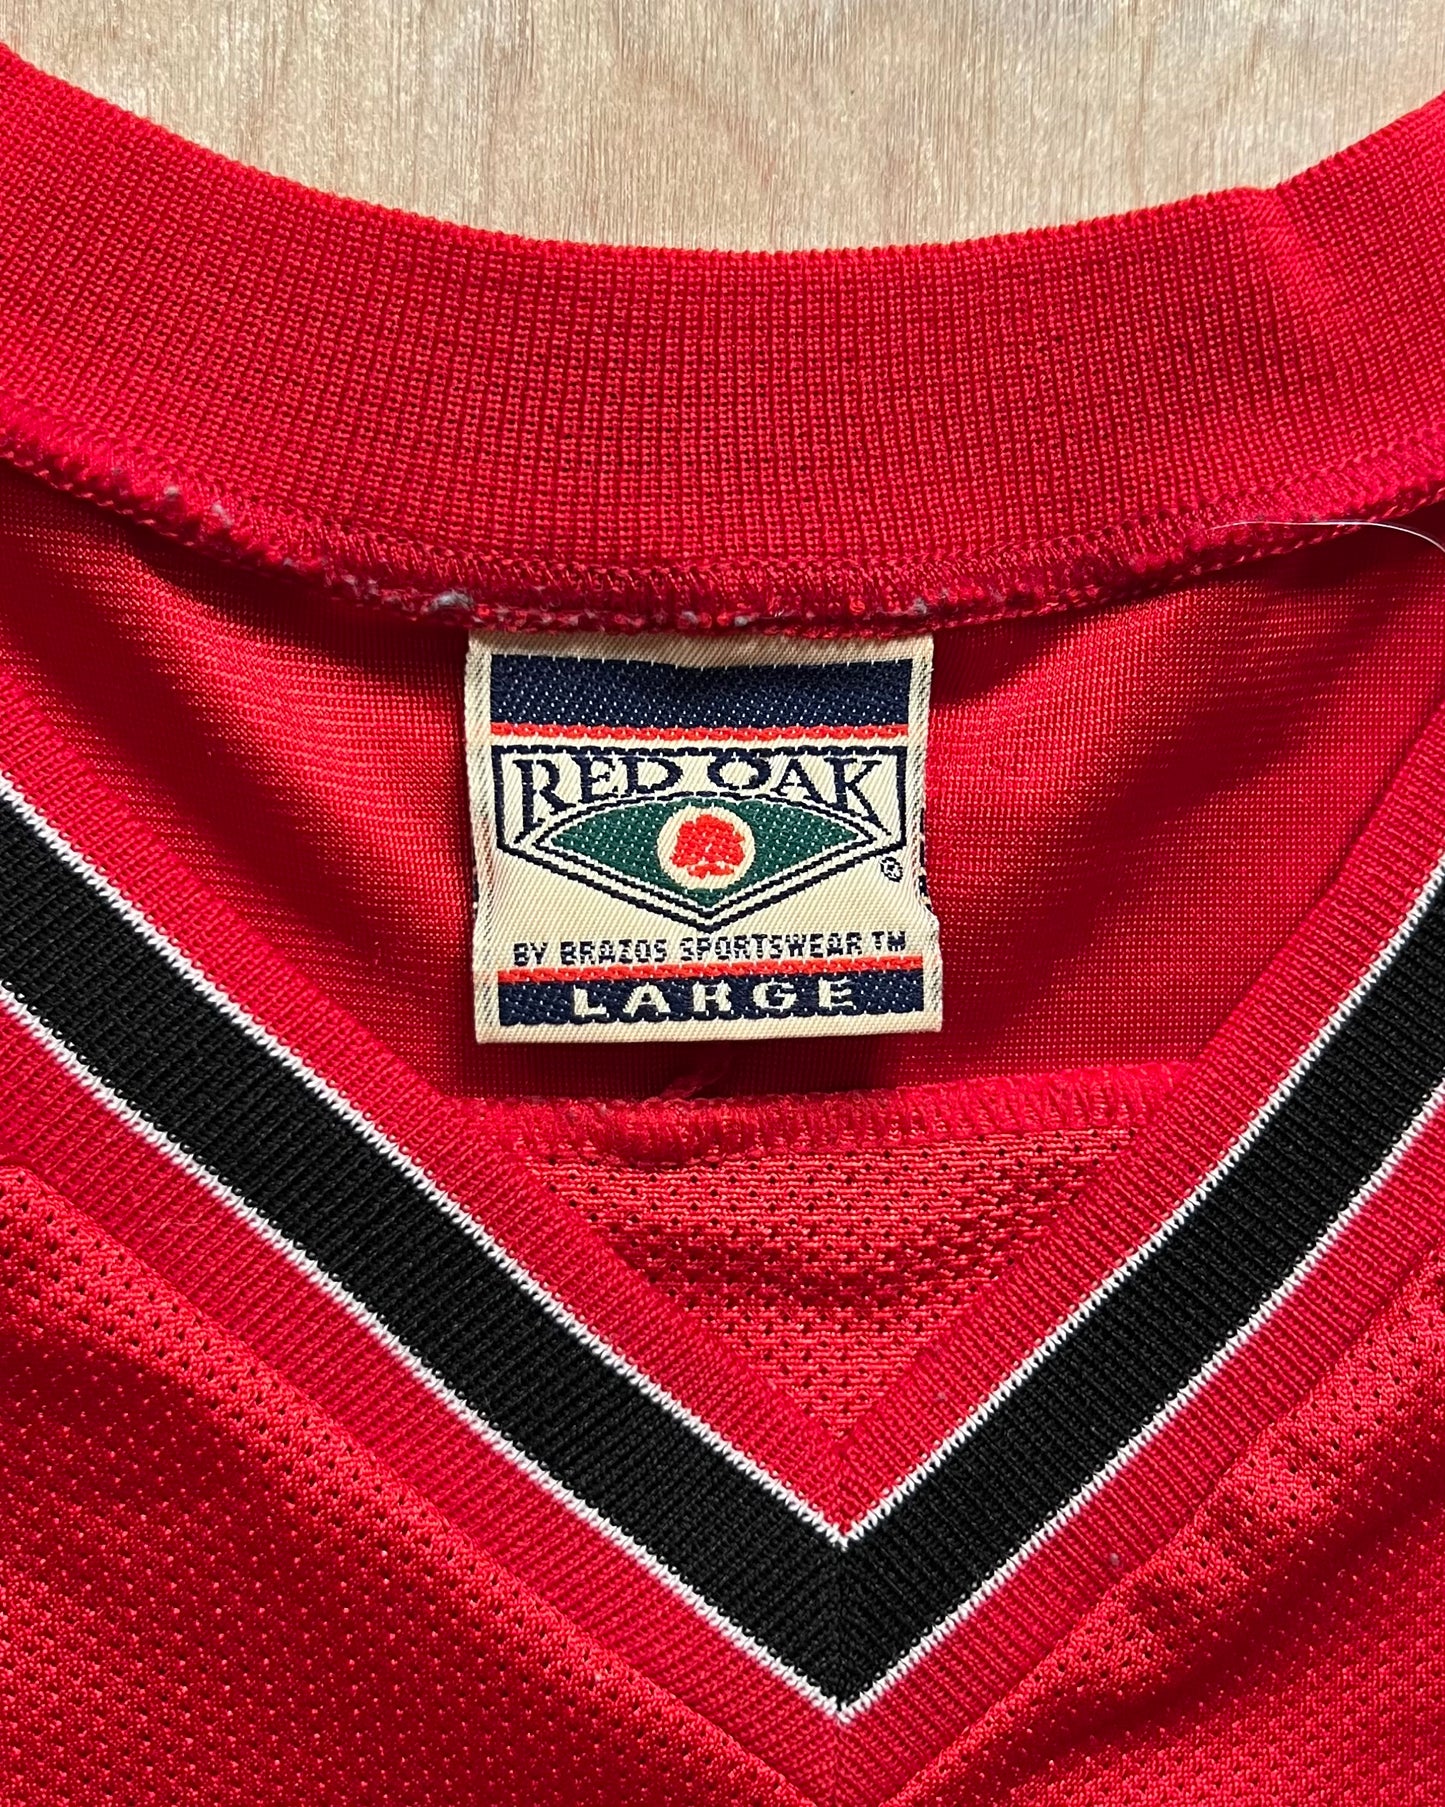 1990's Wisconsin Badger Hockey Jersey